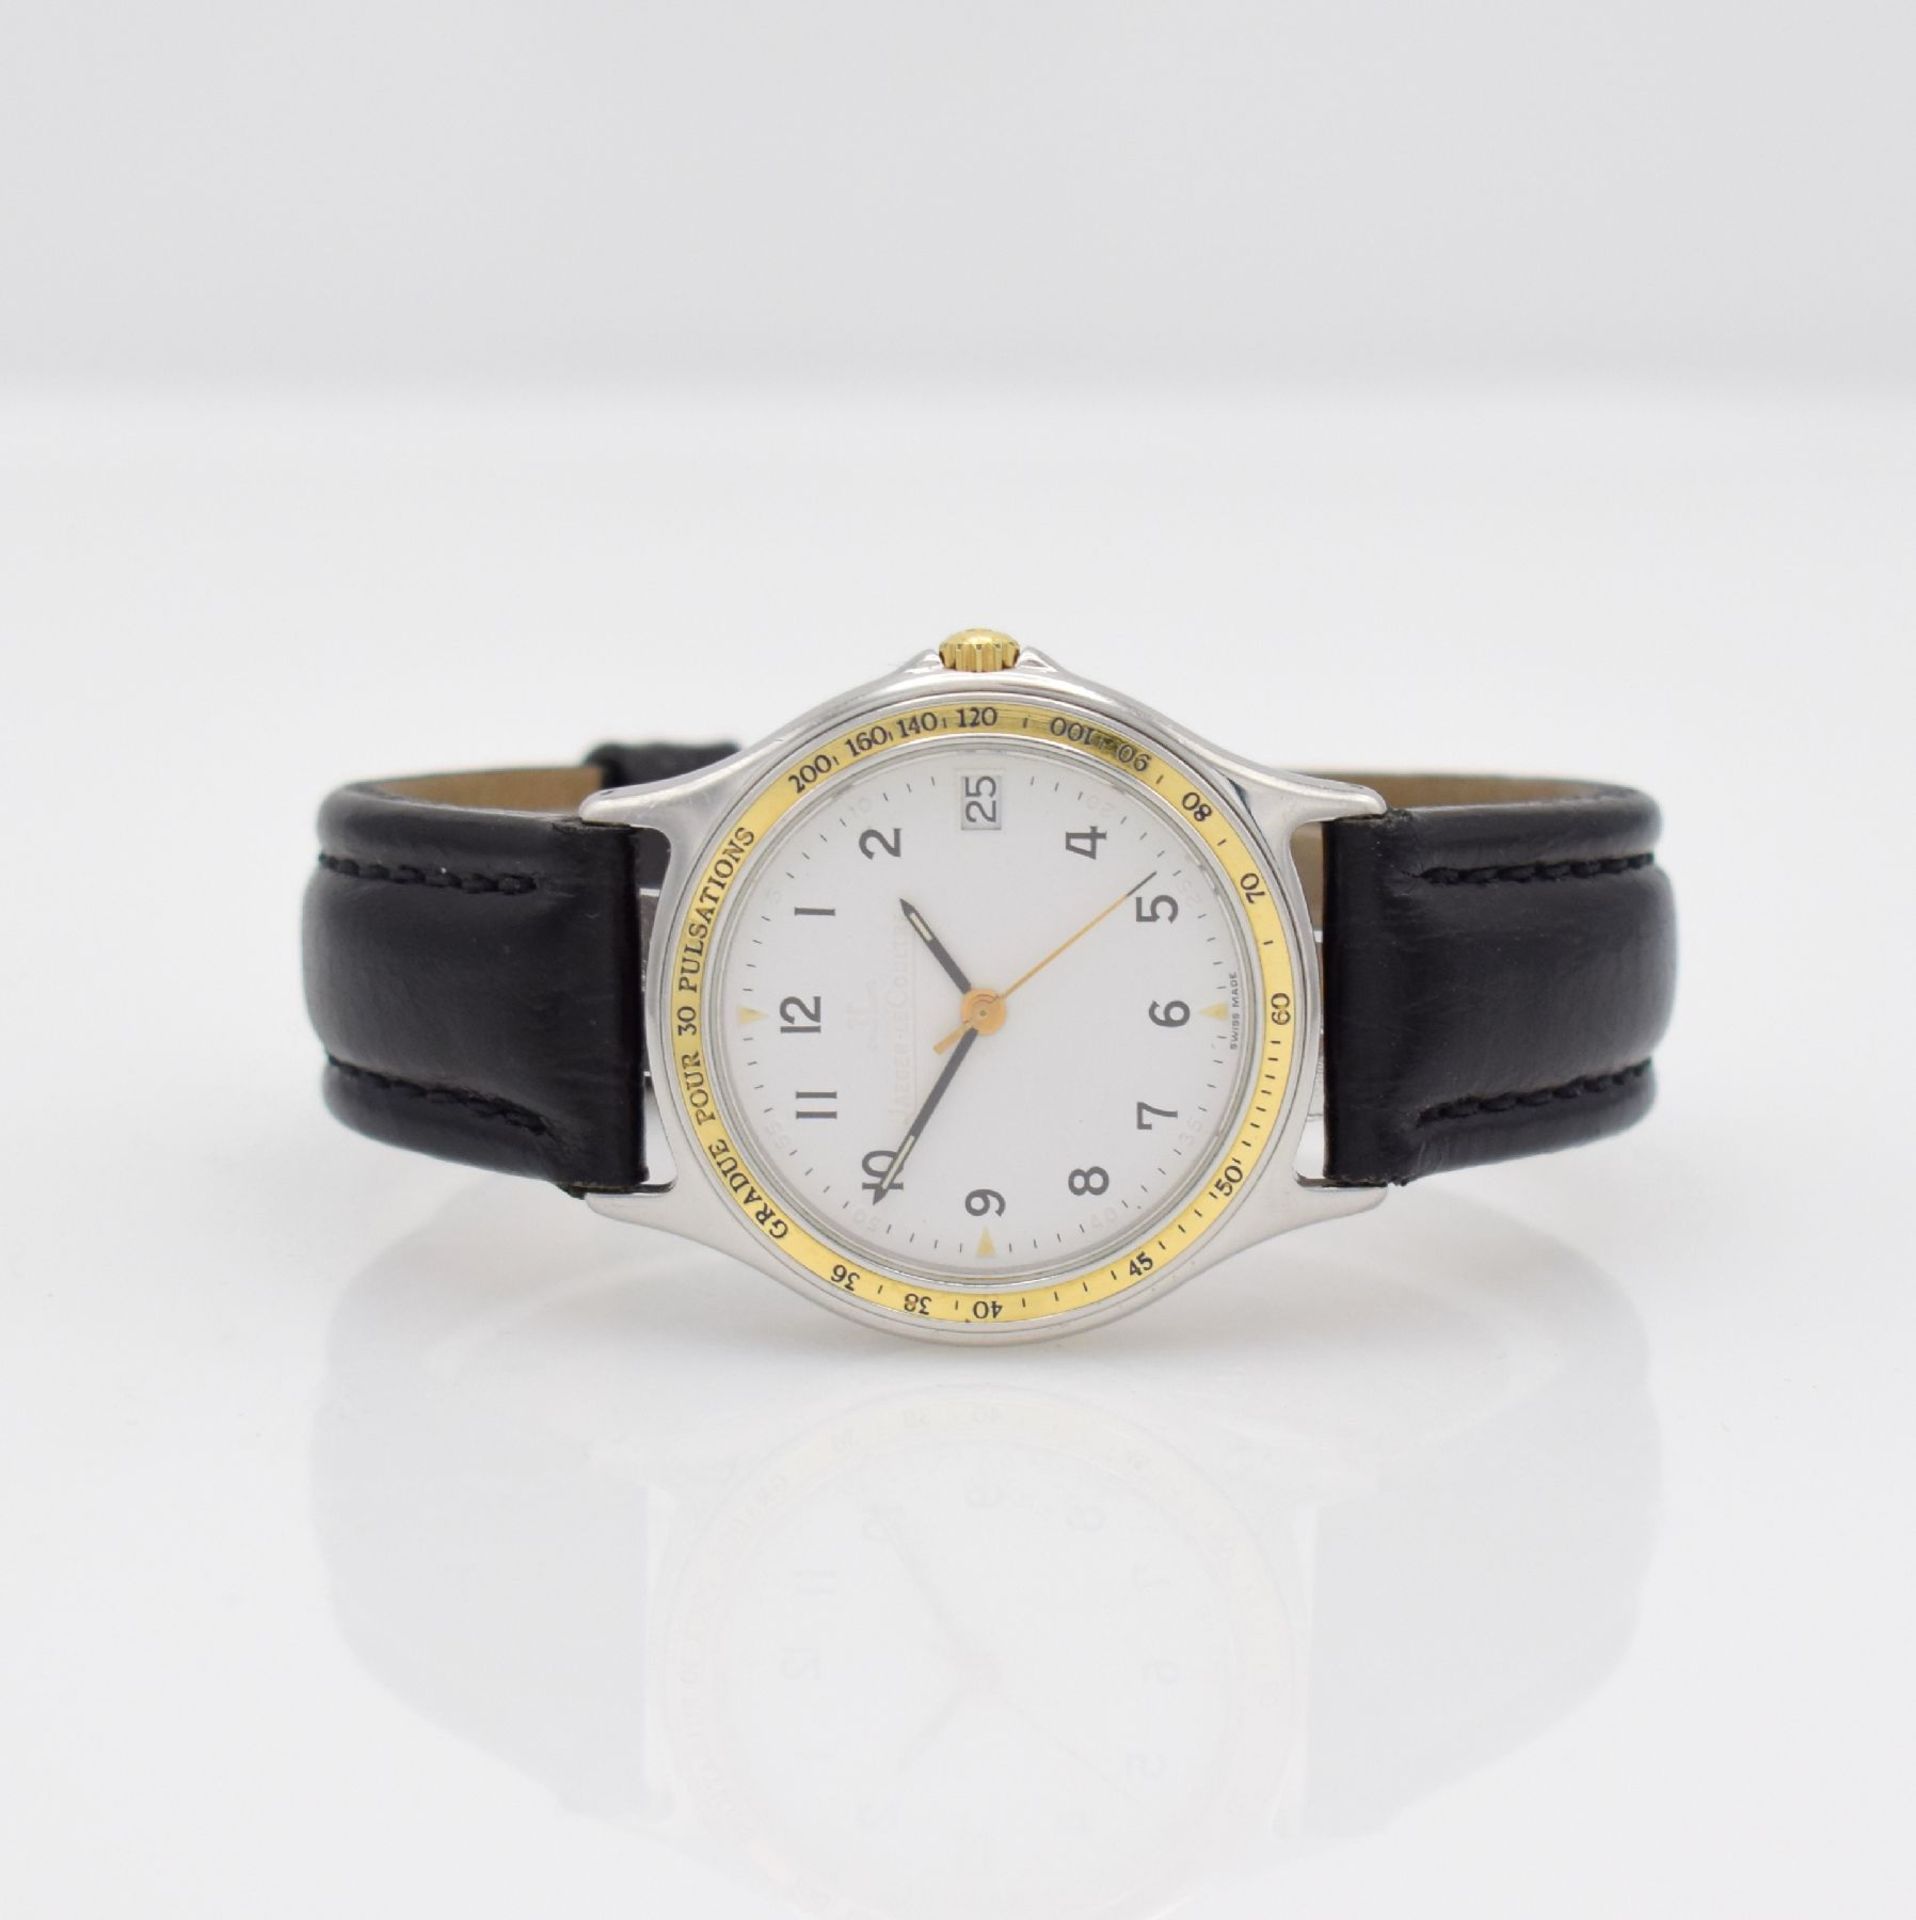 Jaeger-LeCoultre wristwatch in steel/gold, Switzerland around 1985, 4-times screwed down case